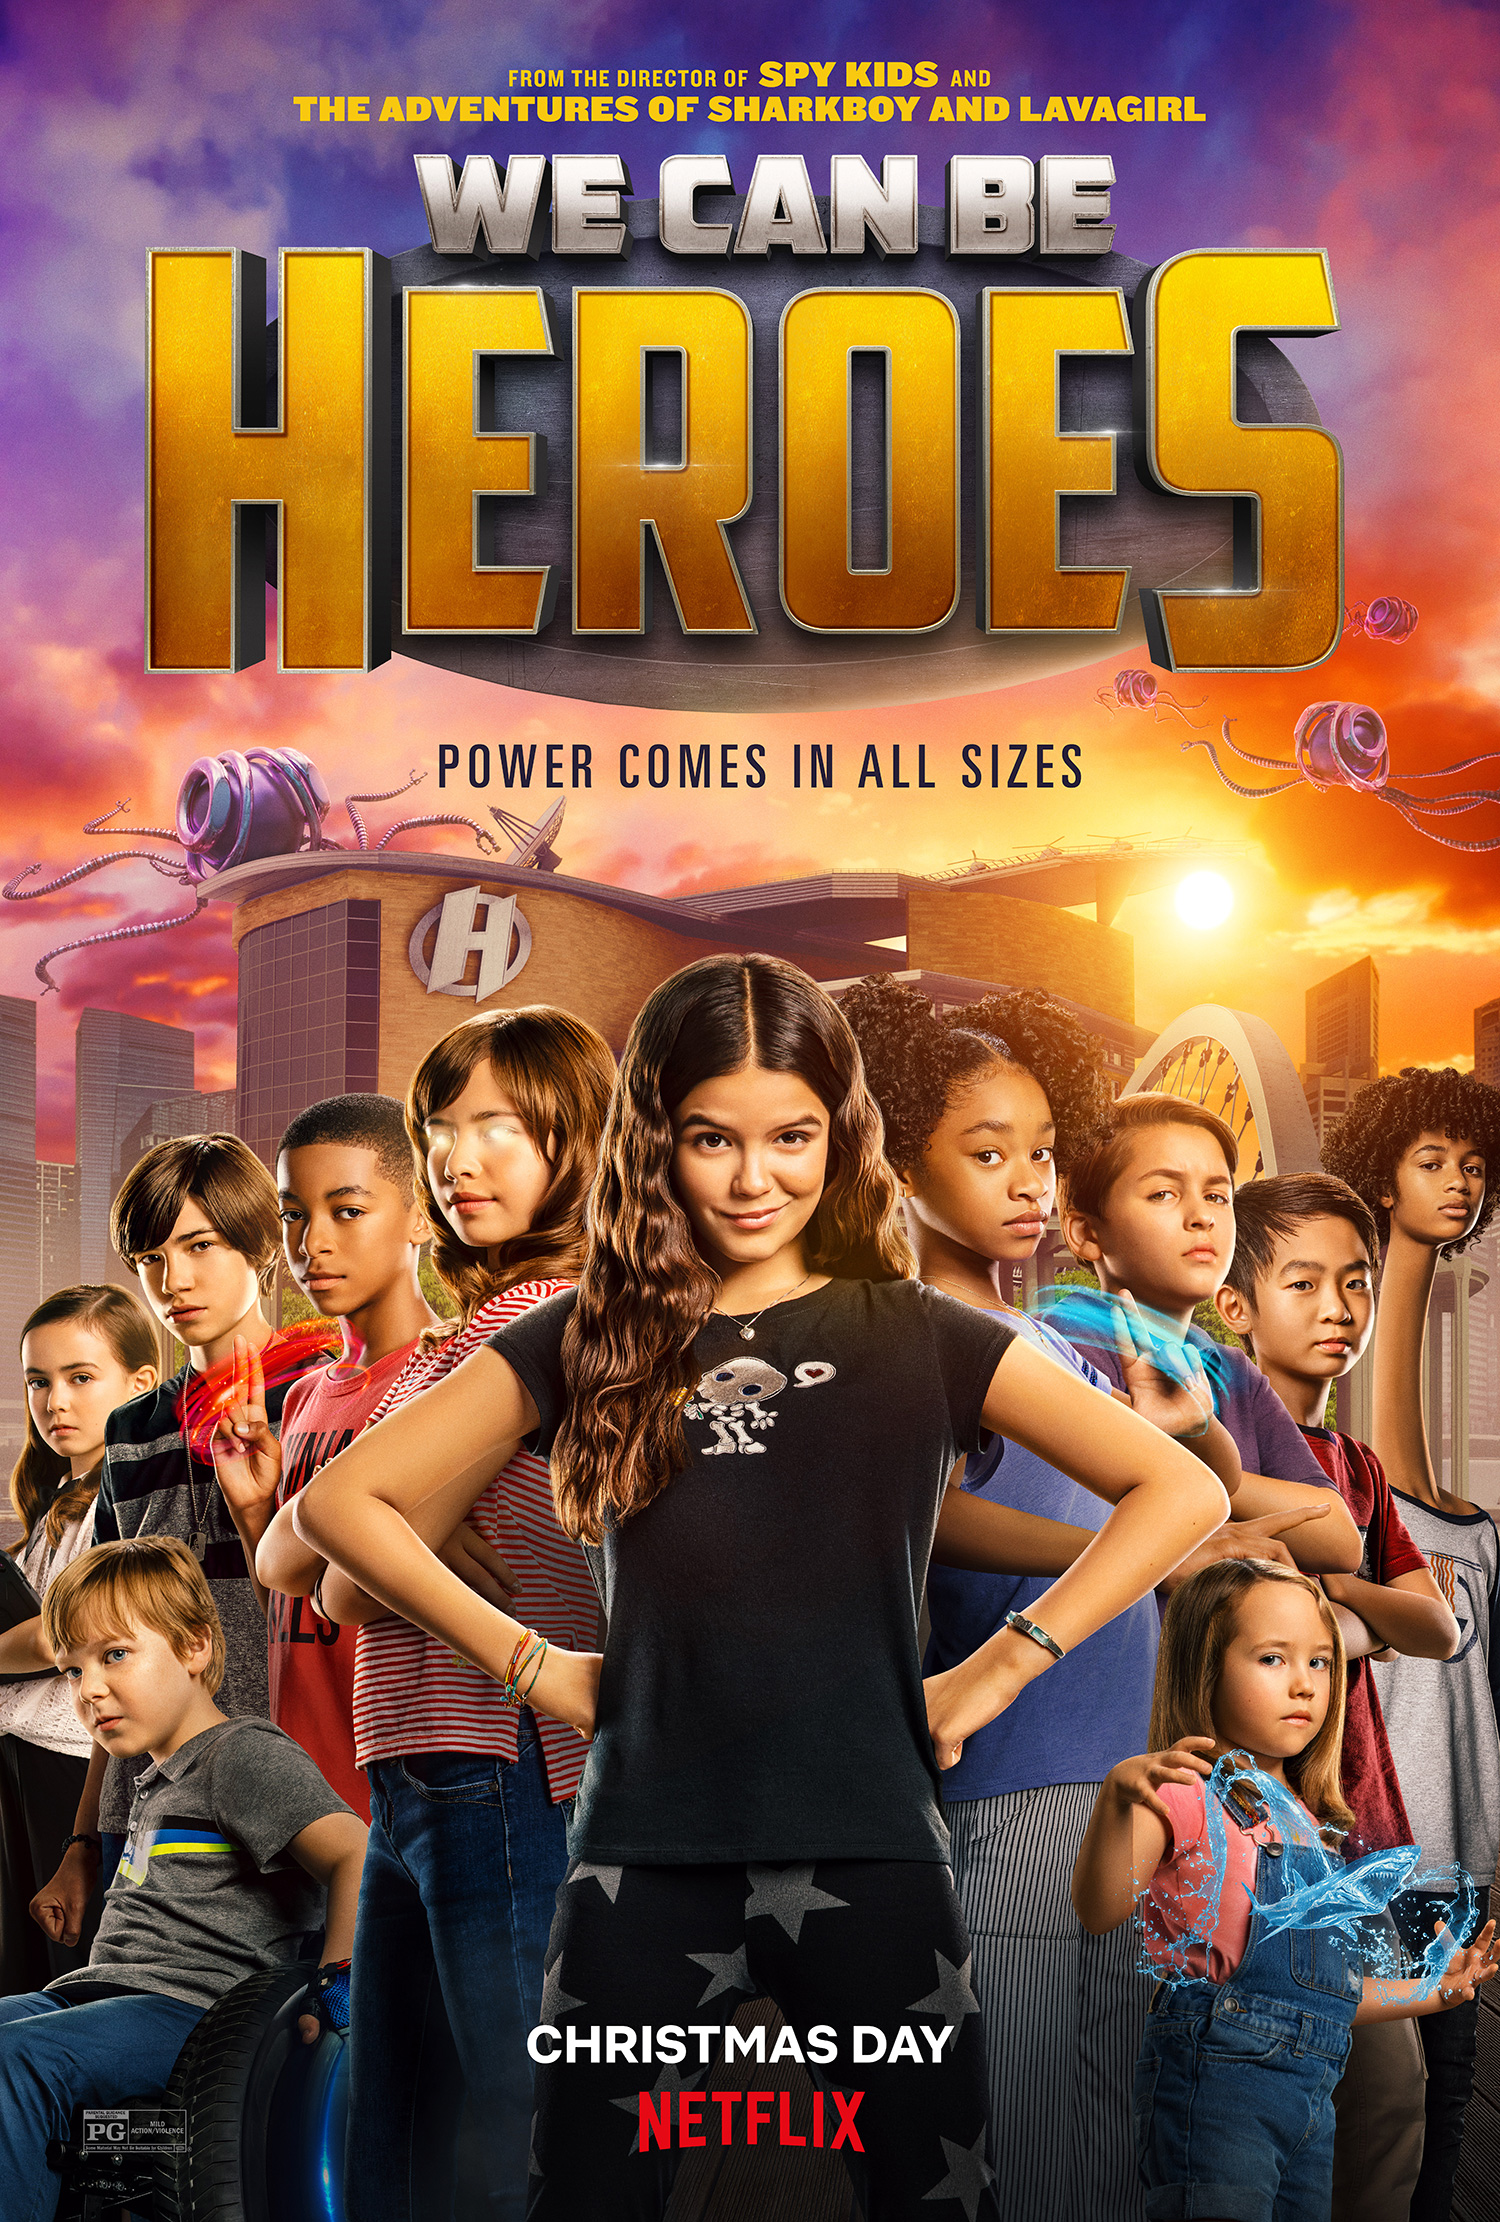 We Can Be Heroes (2020) รวมพลังเด็กพันธุ์แกร่ง YaYa Gosselin